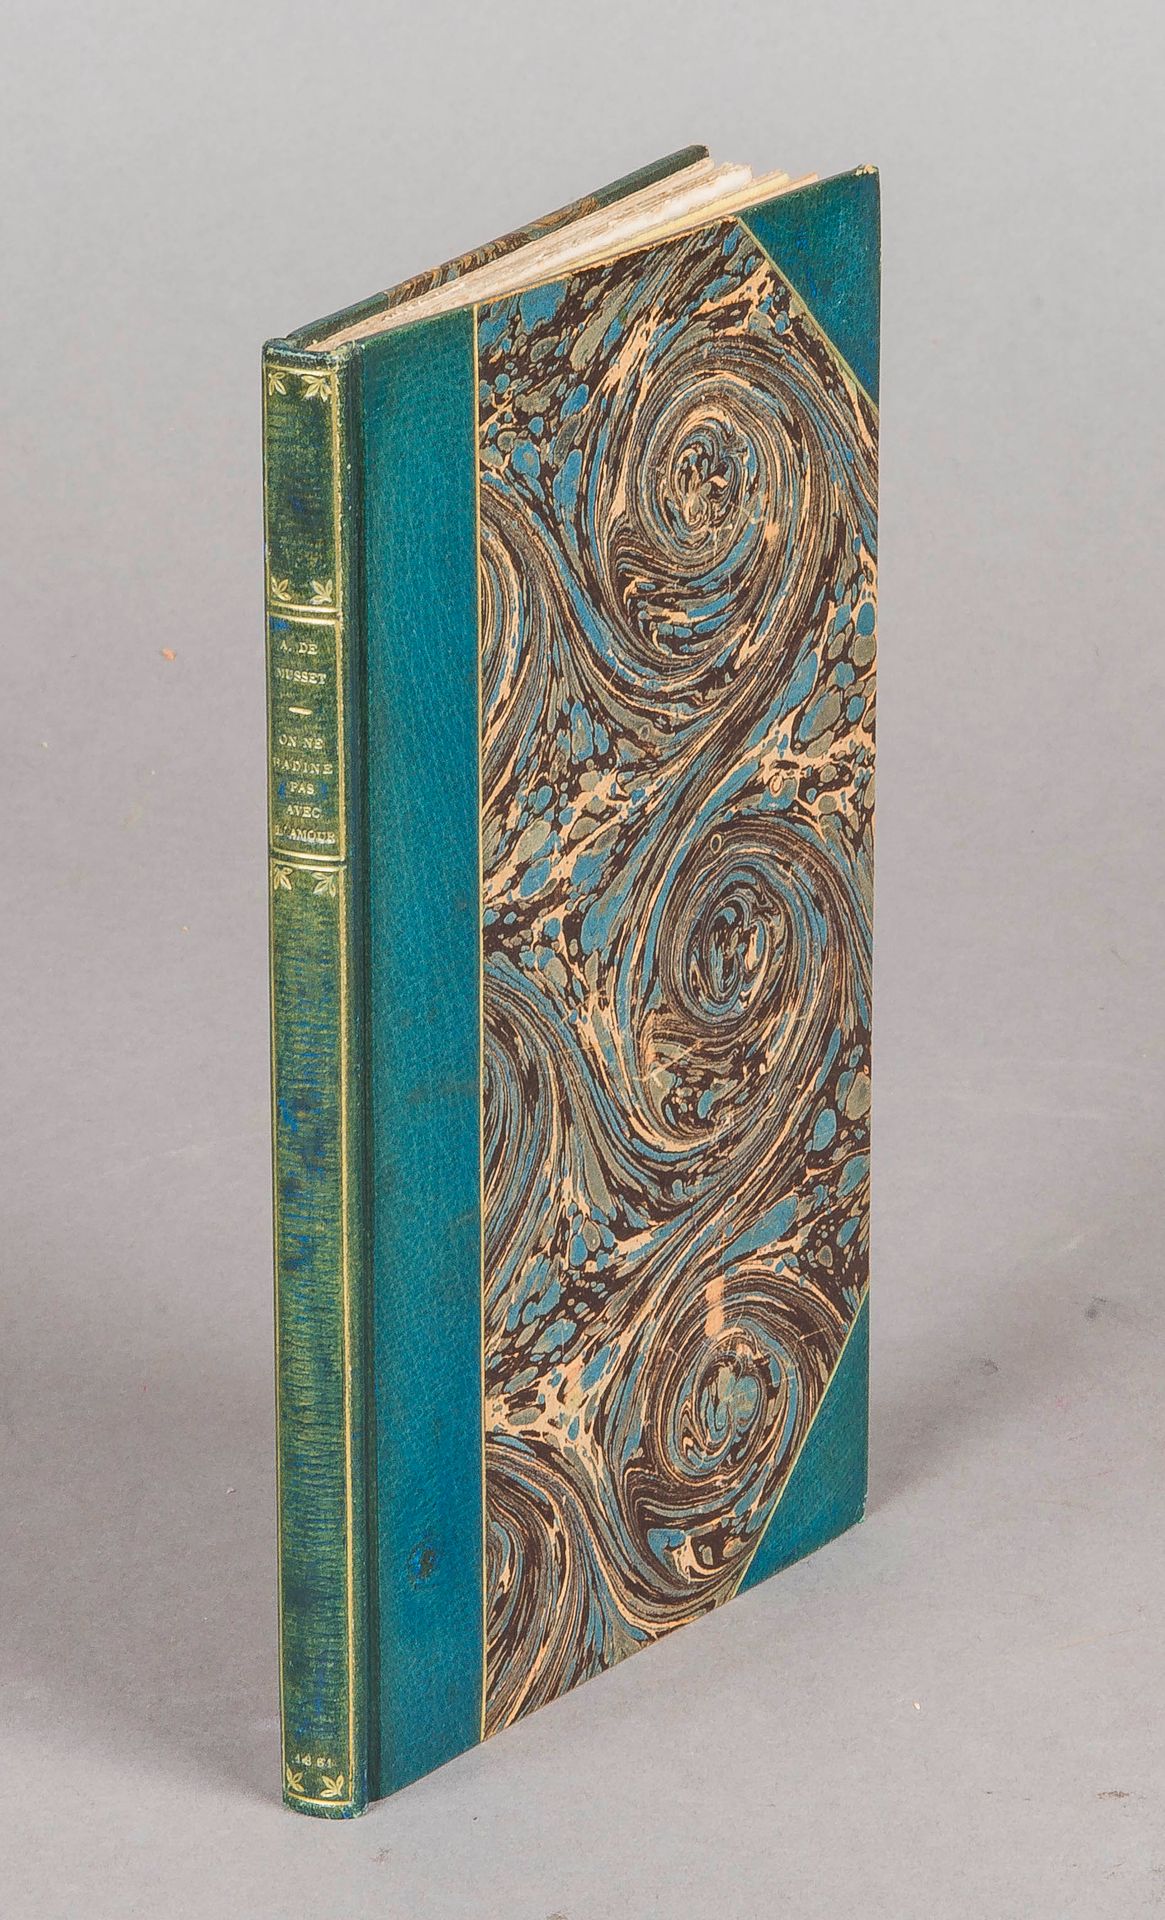 Null 阿尔弗雷德-德-穆塞
On ne badine pas avec l'amour》。
巴黎，Charpentier 出版社，1861 年，12 开本，&hellip;